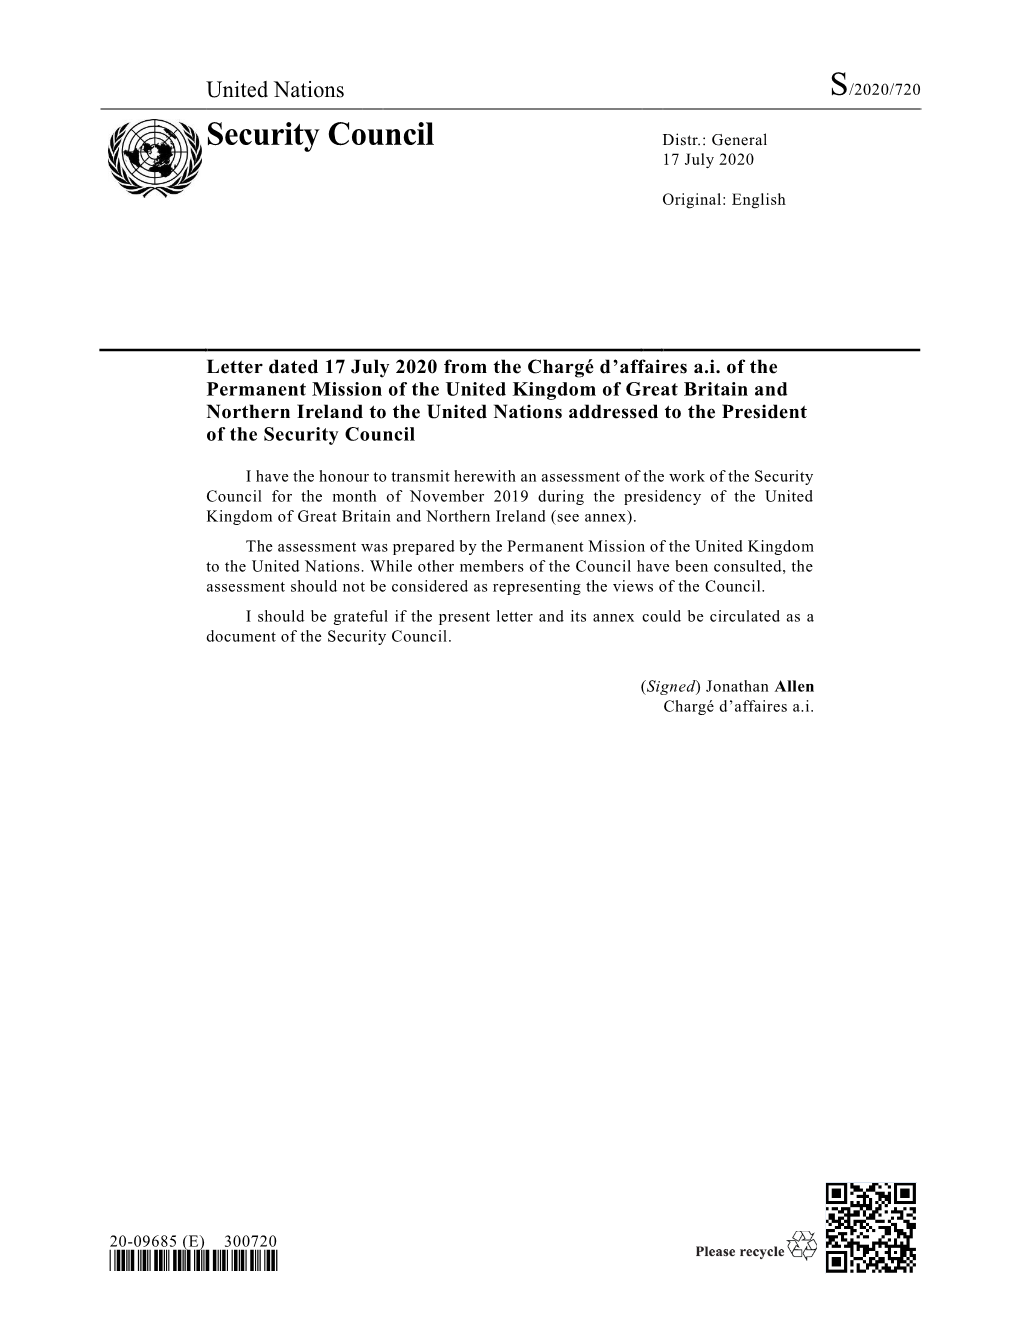 Security Council Distr.: General 17 July 2020